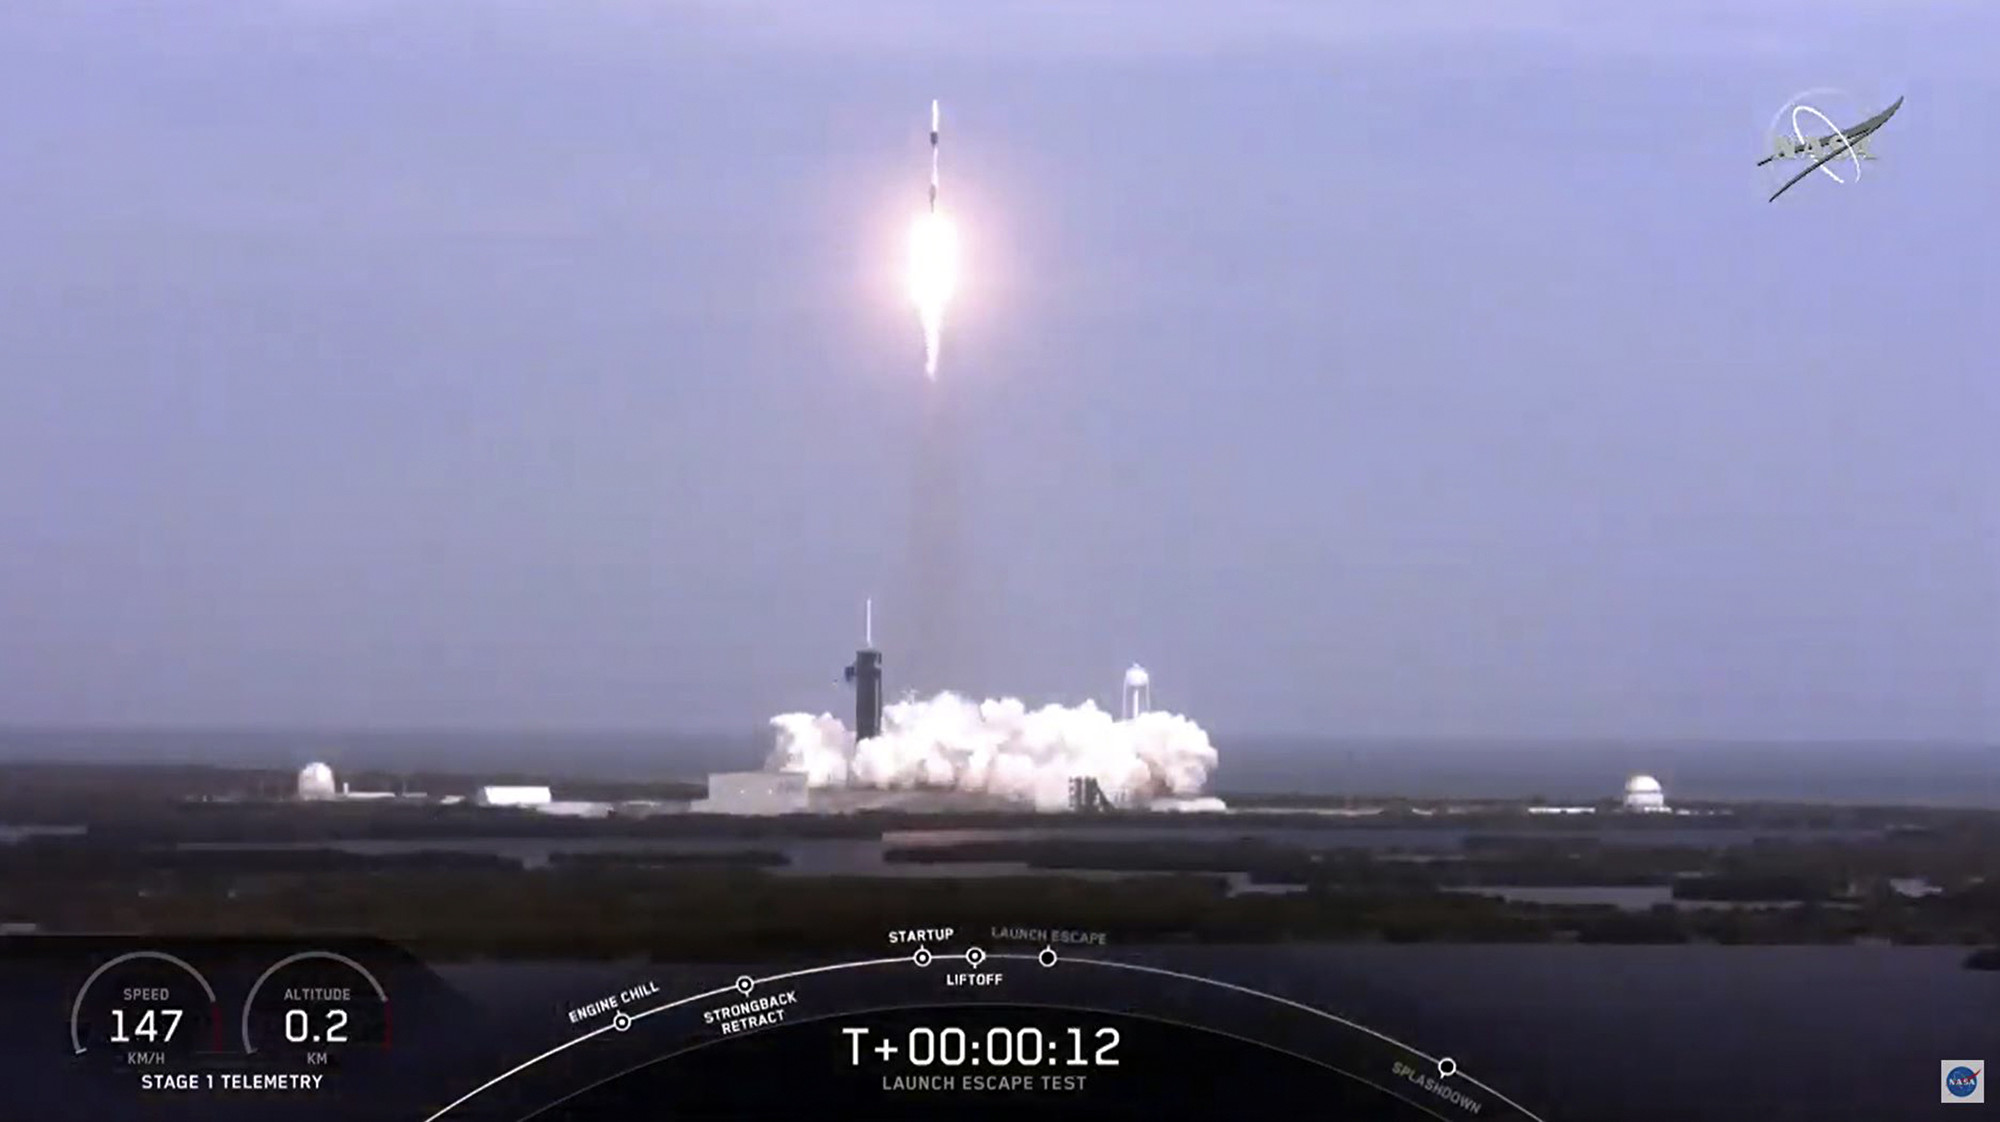  SpaceX於1月19日通過了一個載人太空艙的關鍵安全測試。（NASA TV / AFP）